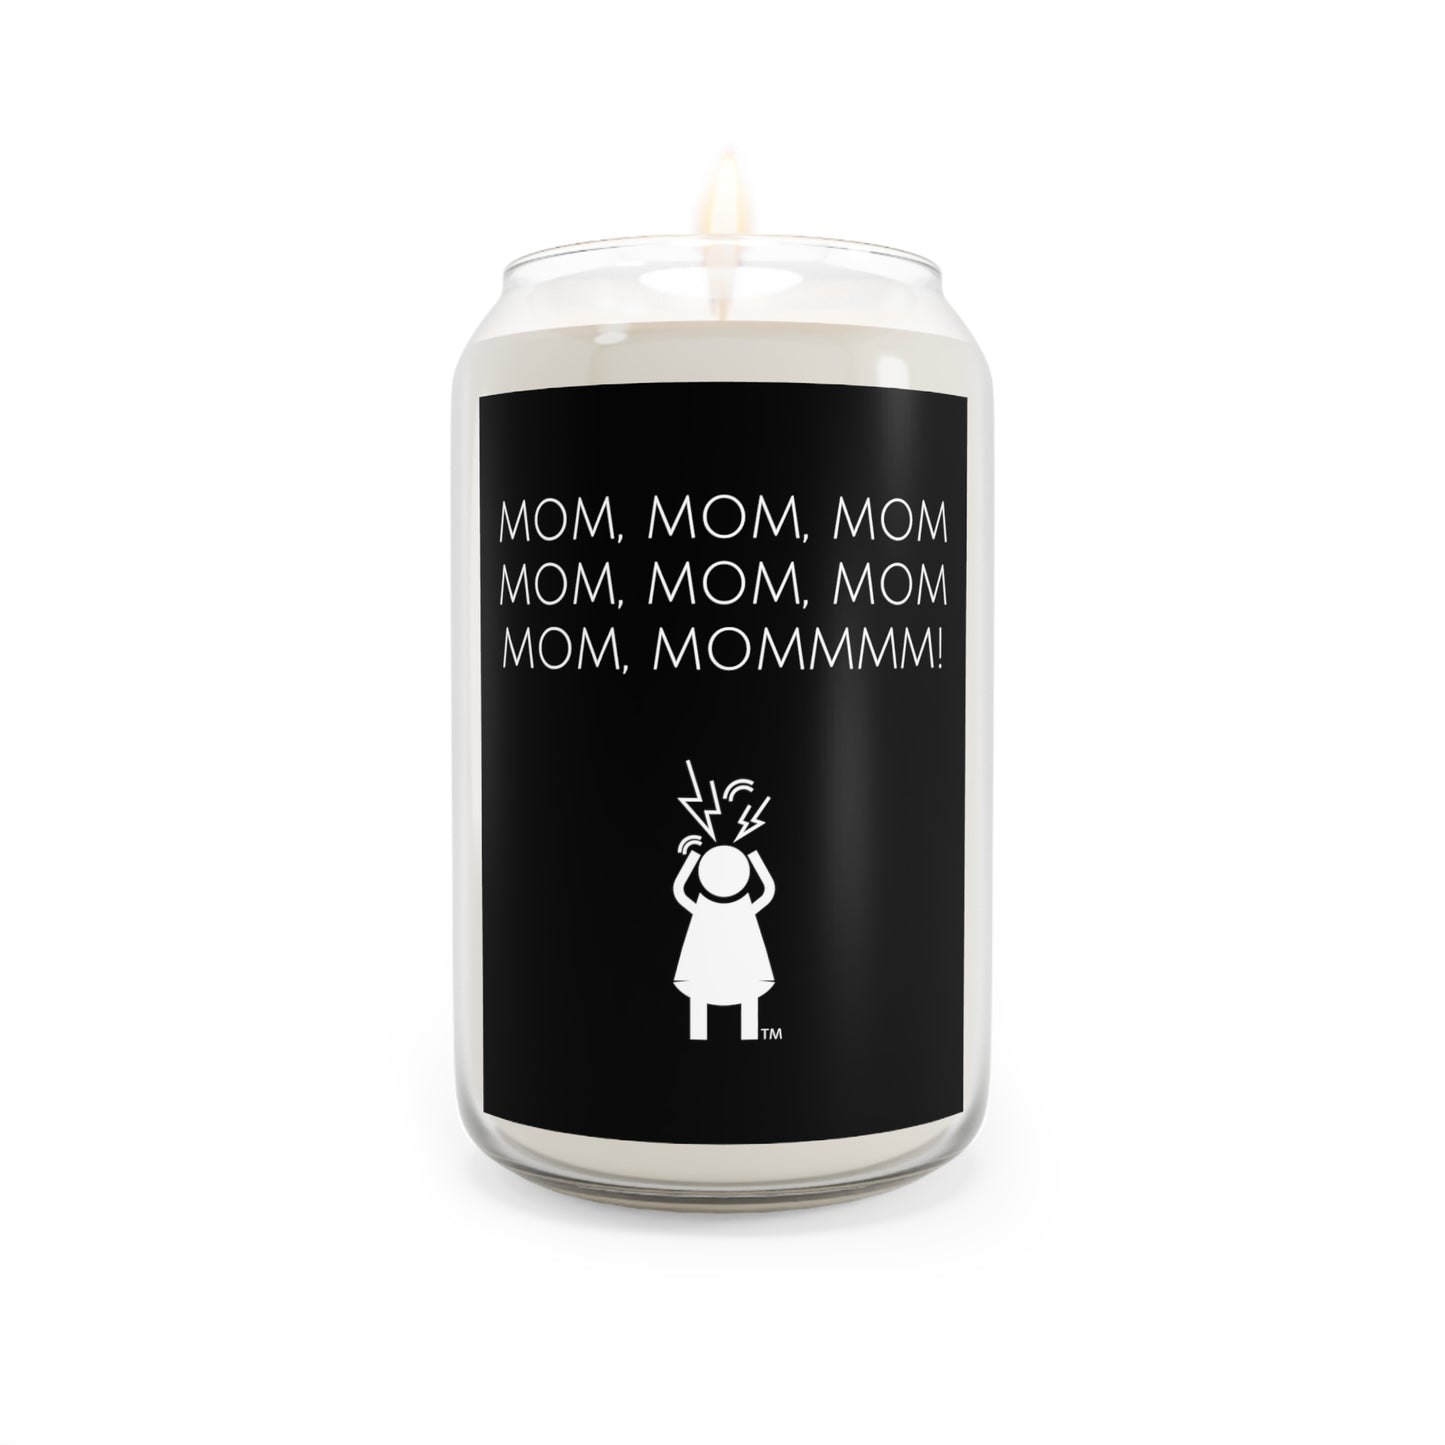 Mom, Mom, Mom, Mom, Mommmmm Screaming Woman Scented Candle, 13.75oz